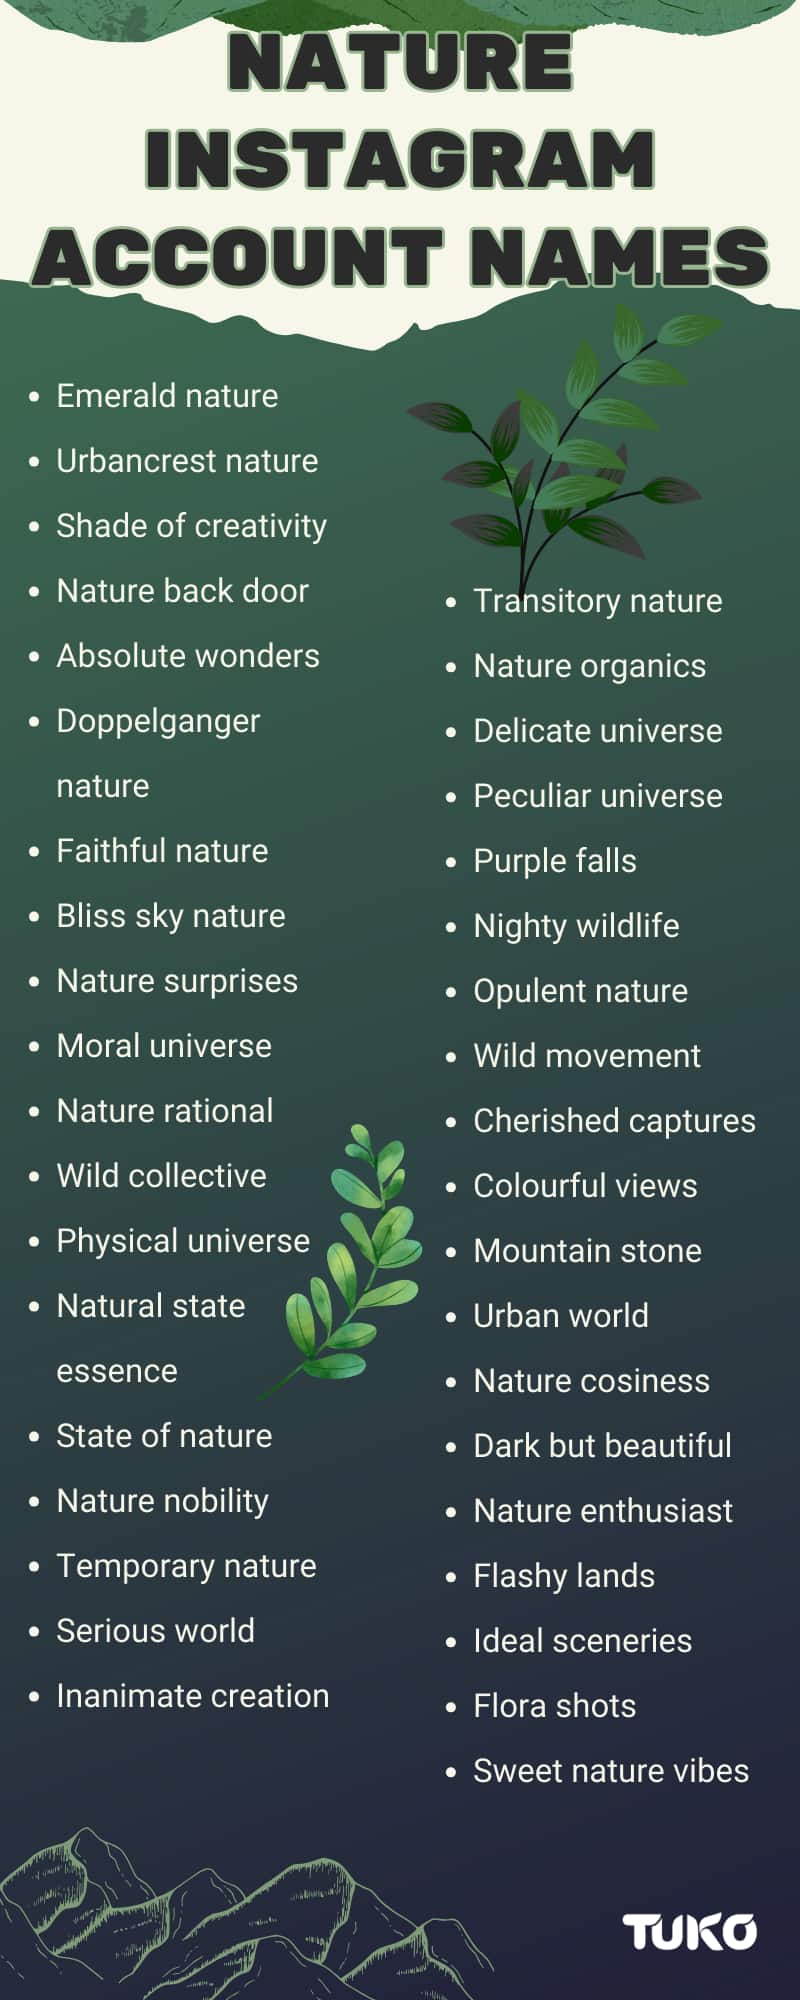 Nature Instagram account names